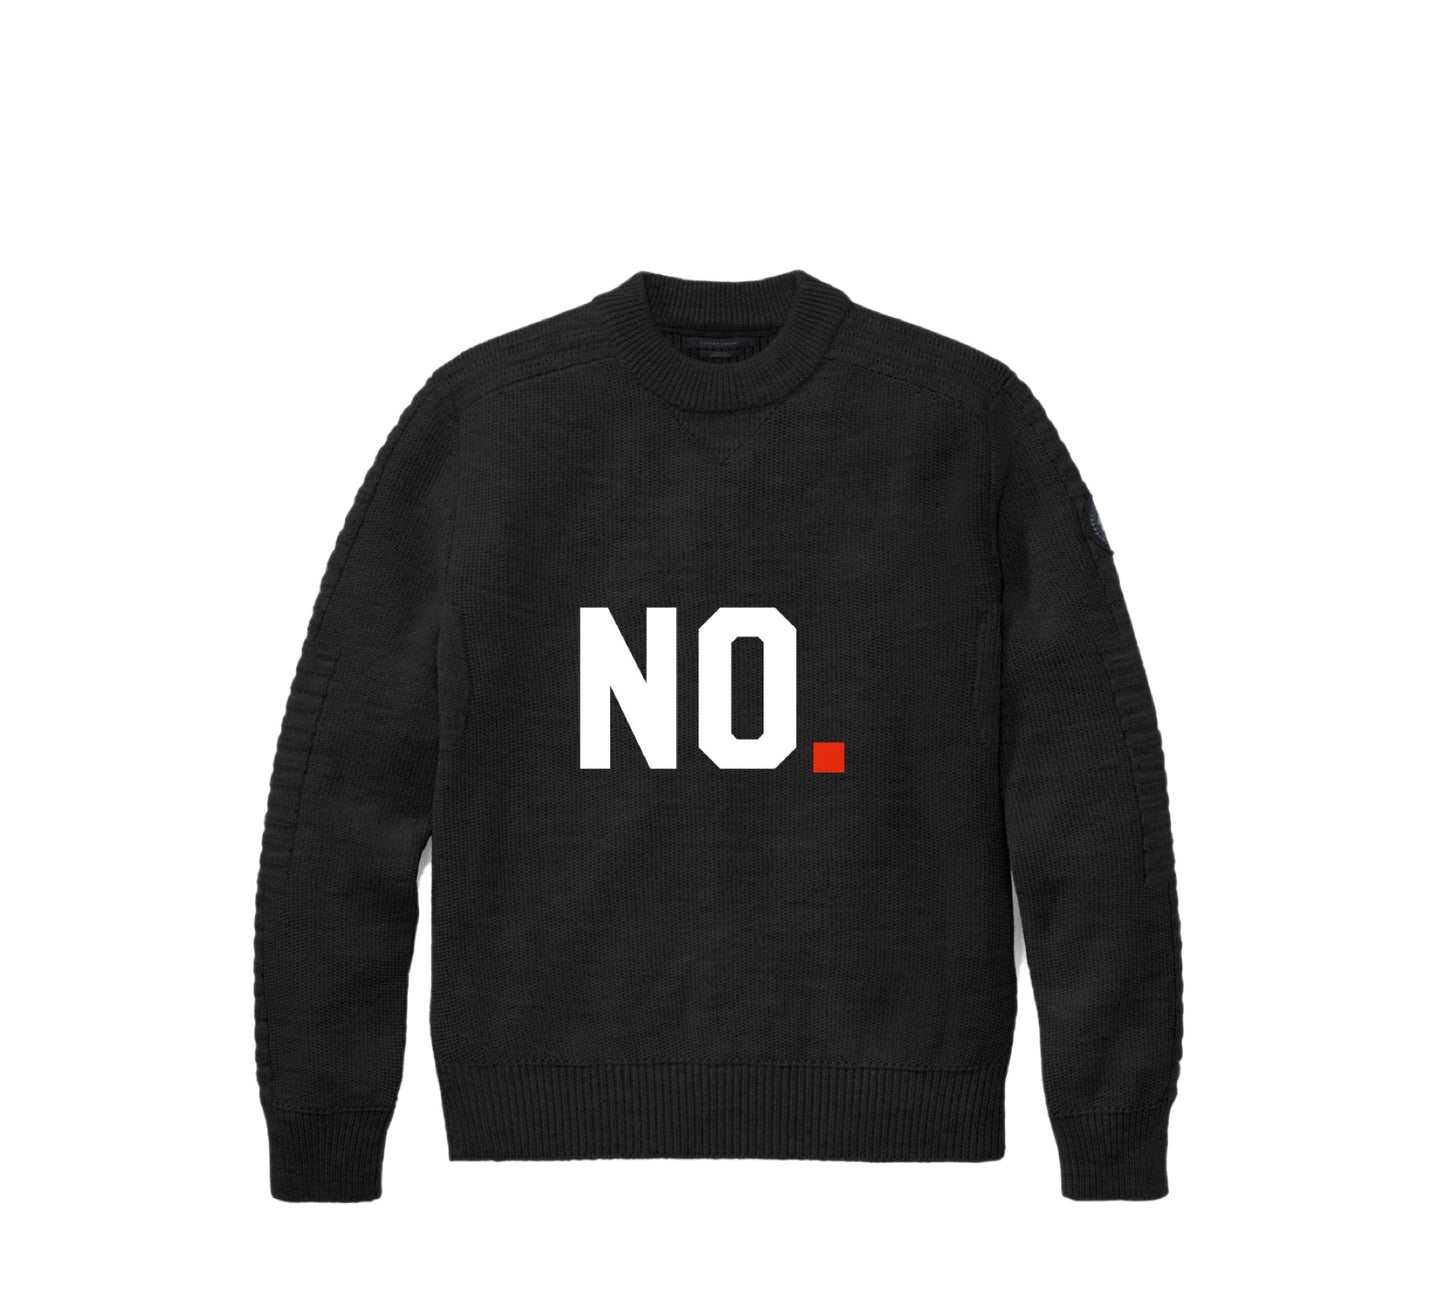 "No" Sweater